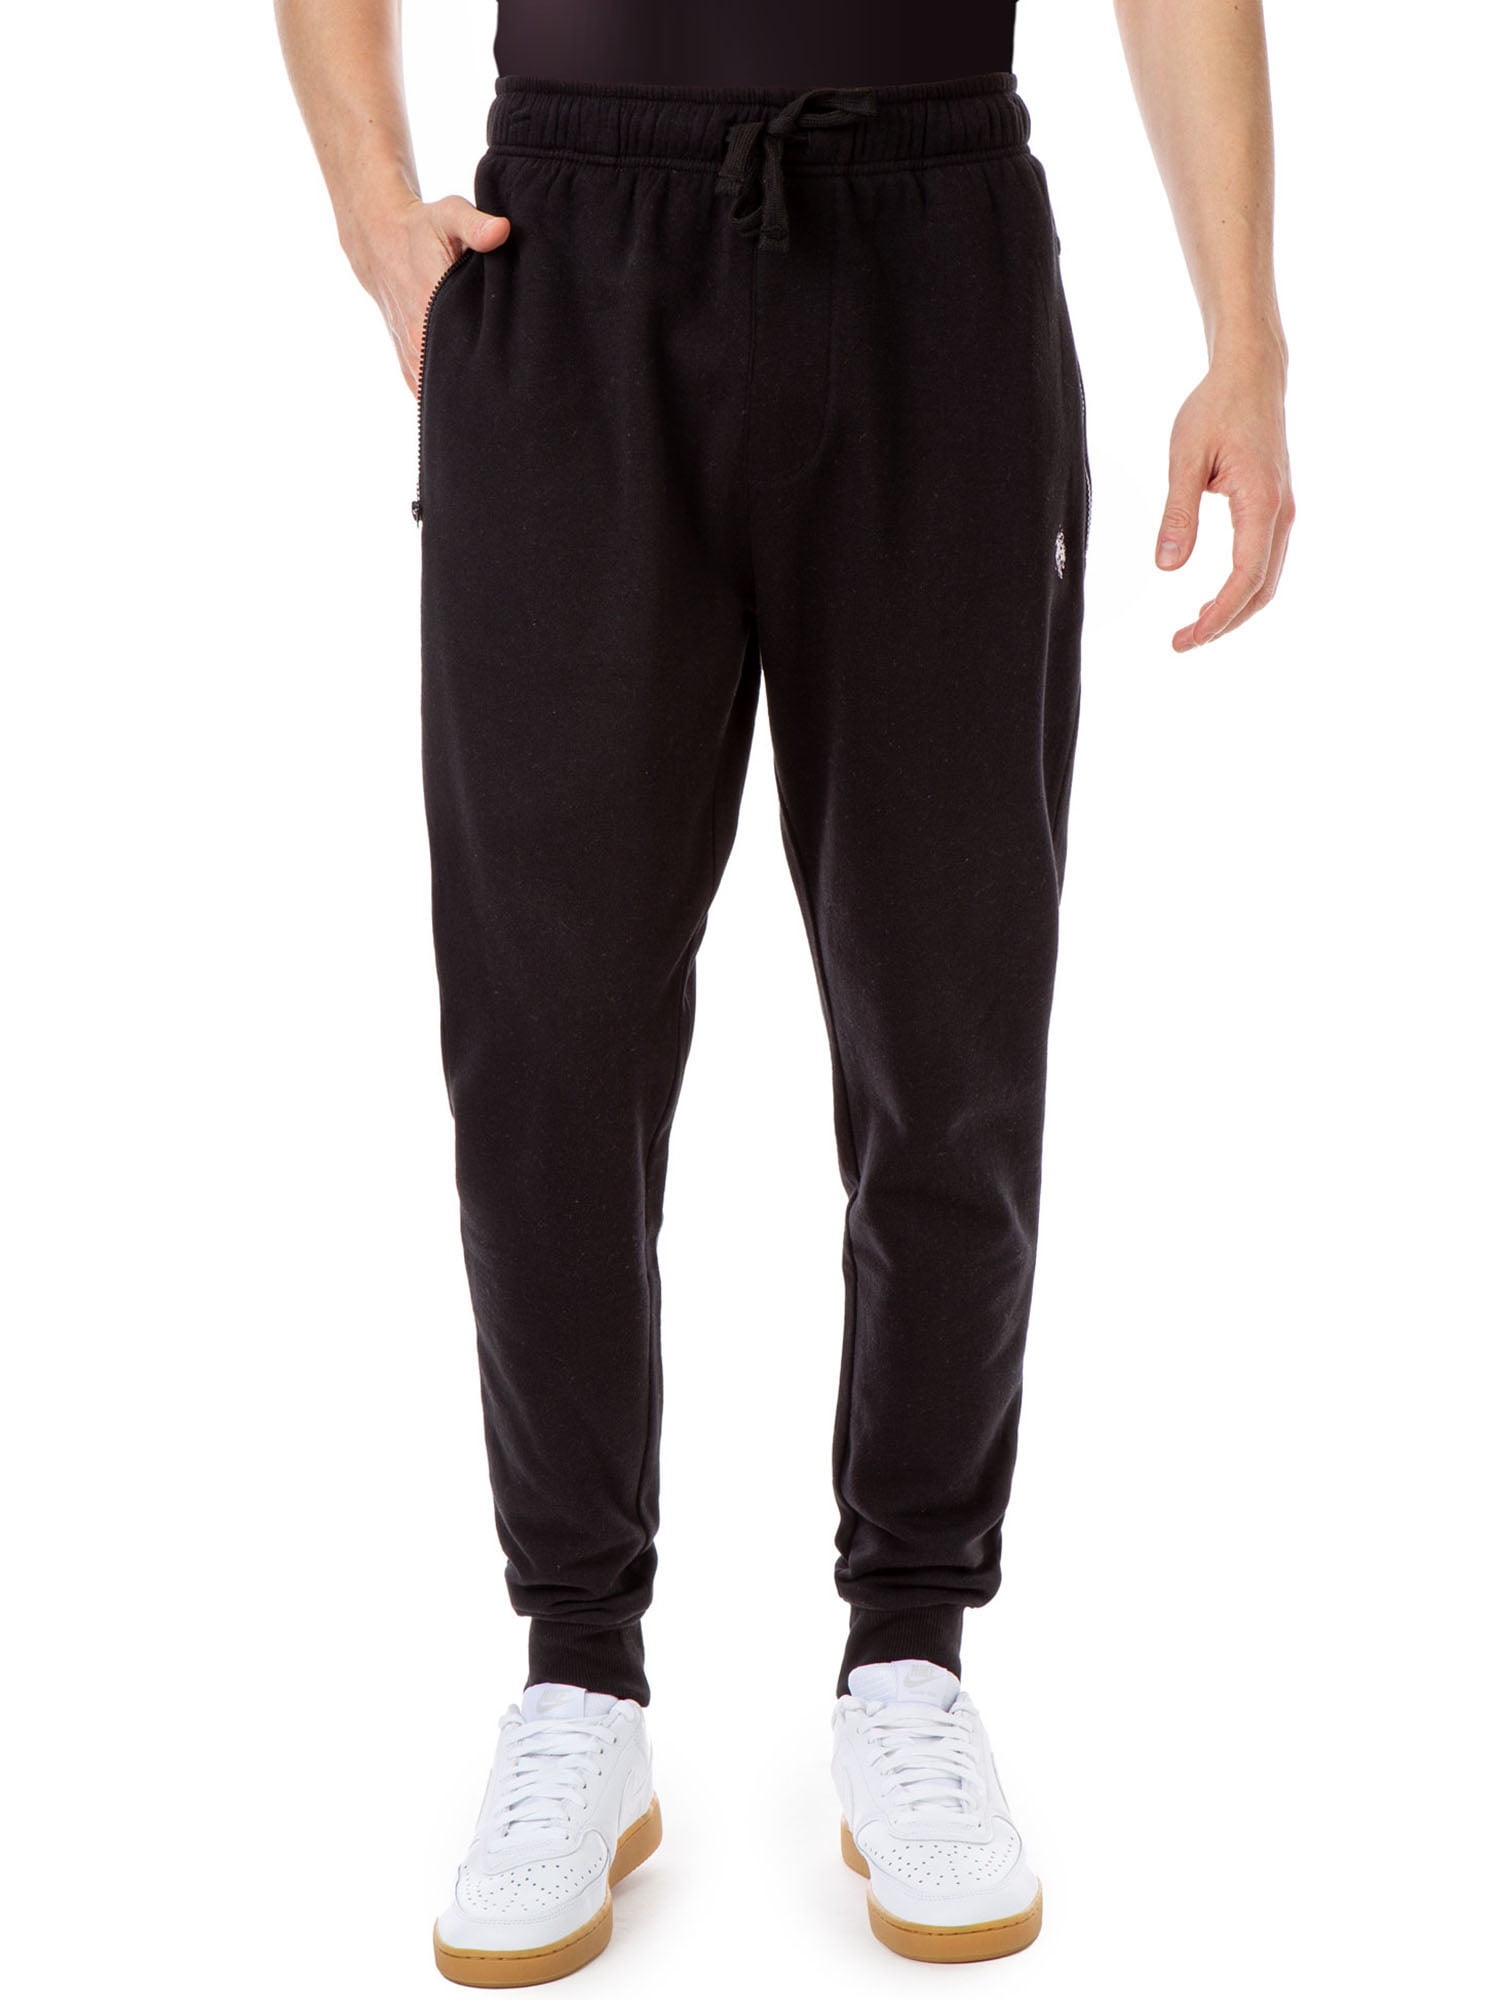 U.S. Polo Assn. Men's Fleece Sweatpants with Zip Pockets - Walmart.com